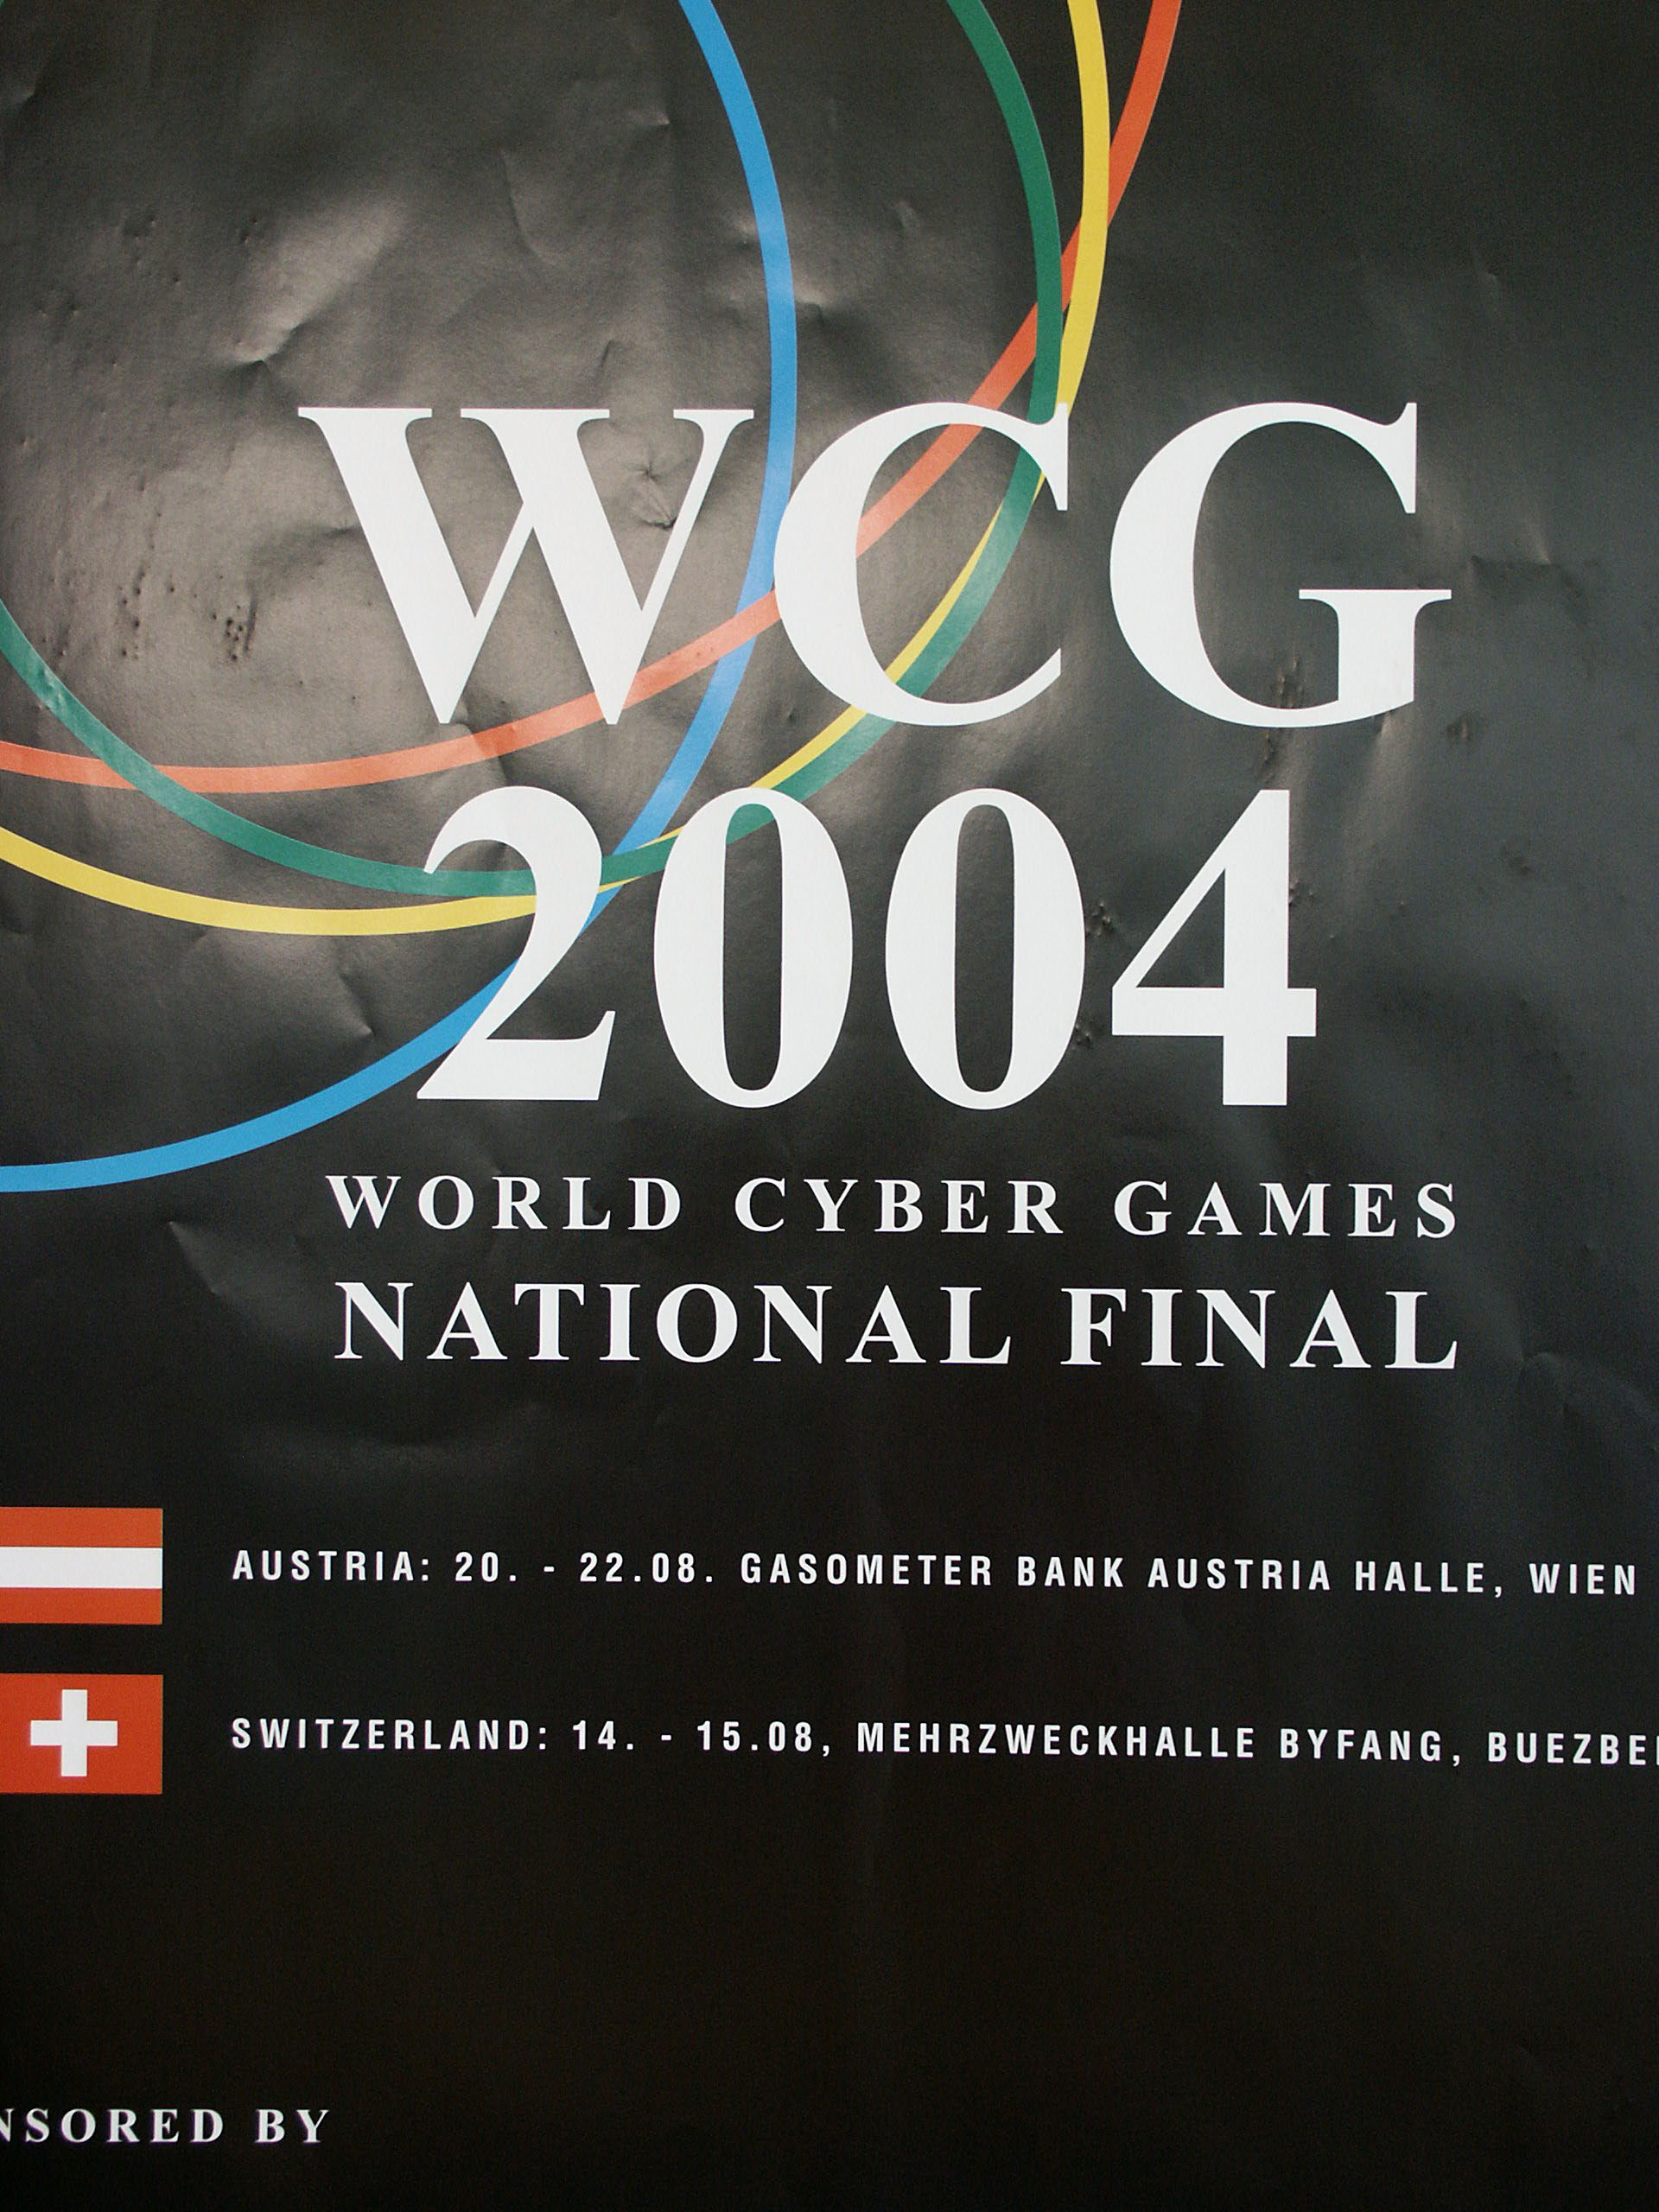 2004-08-14 - WCG Finals Qualifikation 2004 - 129